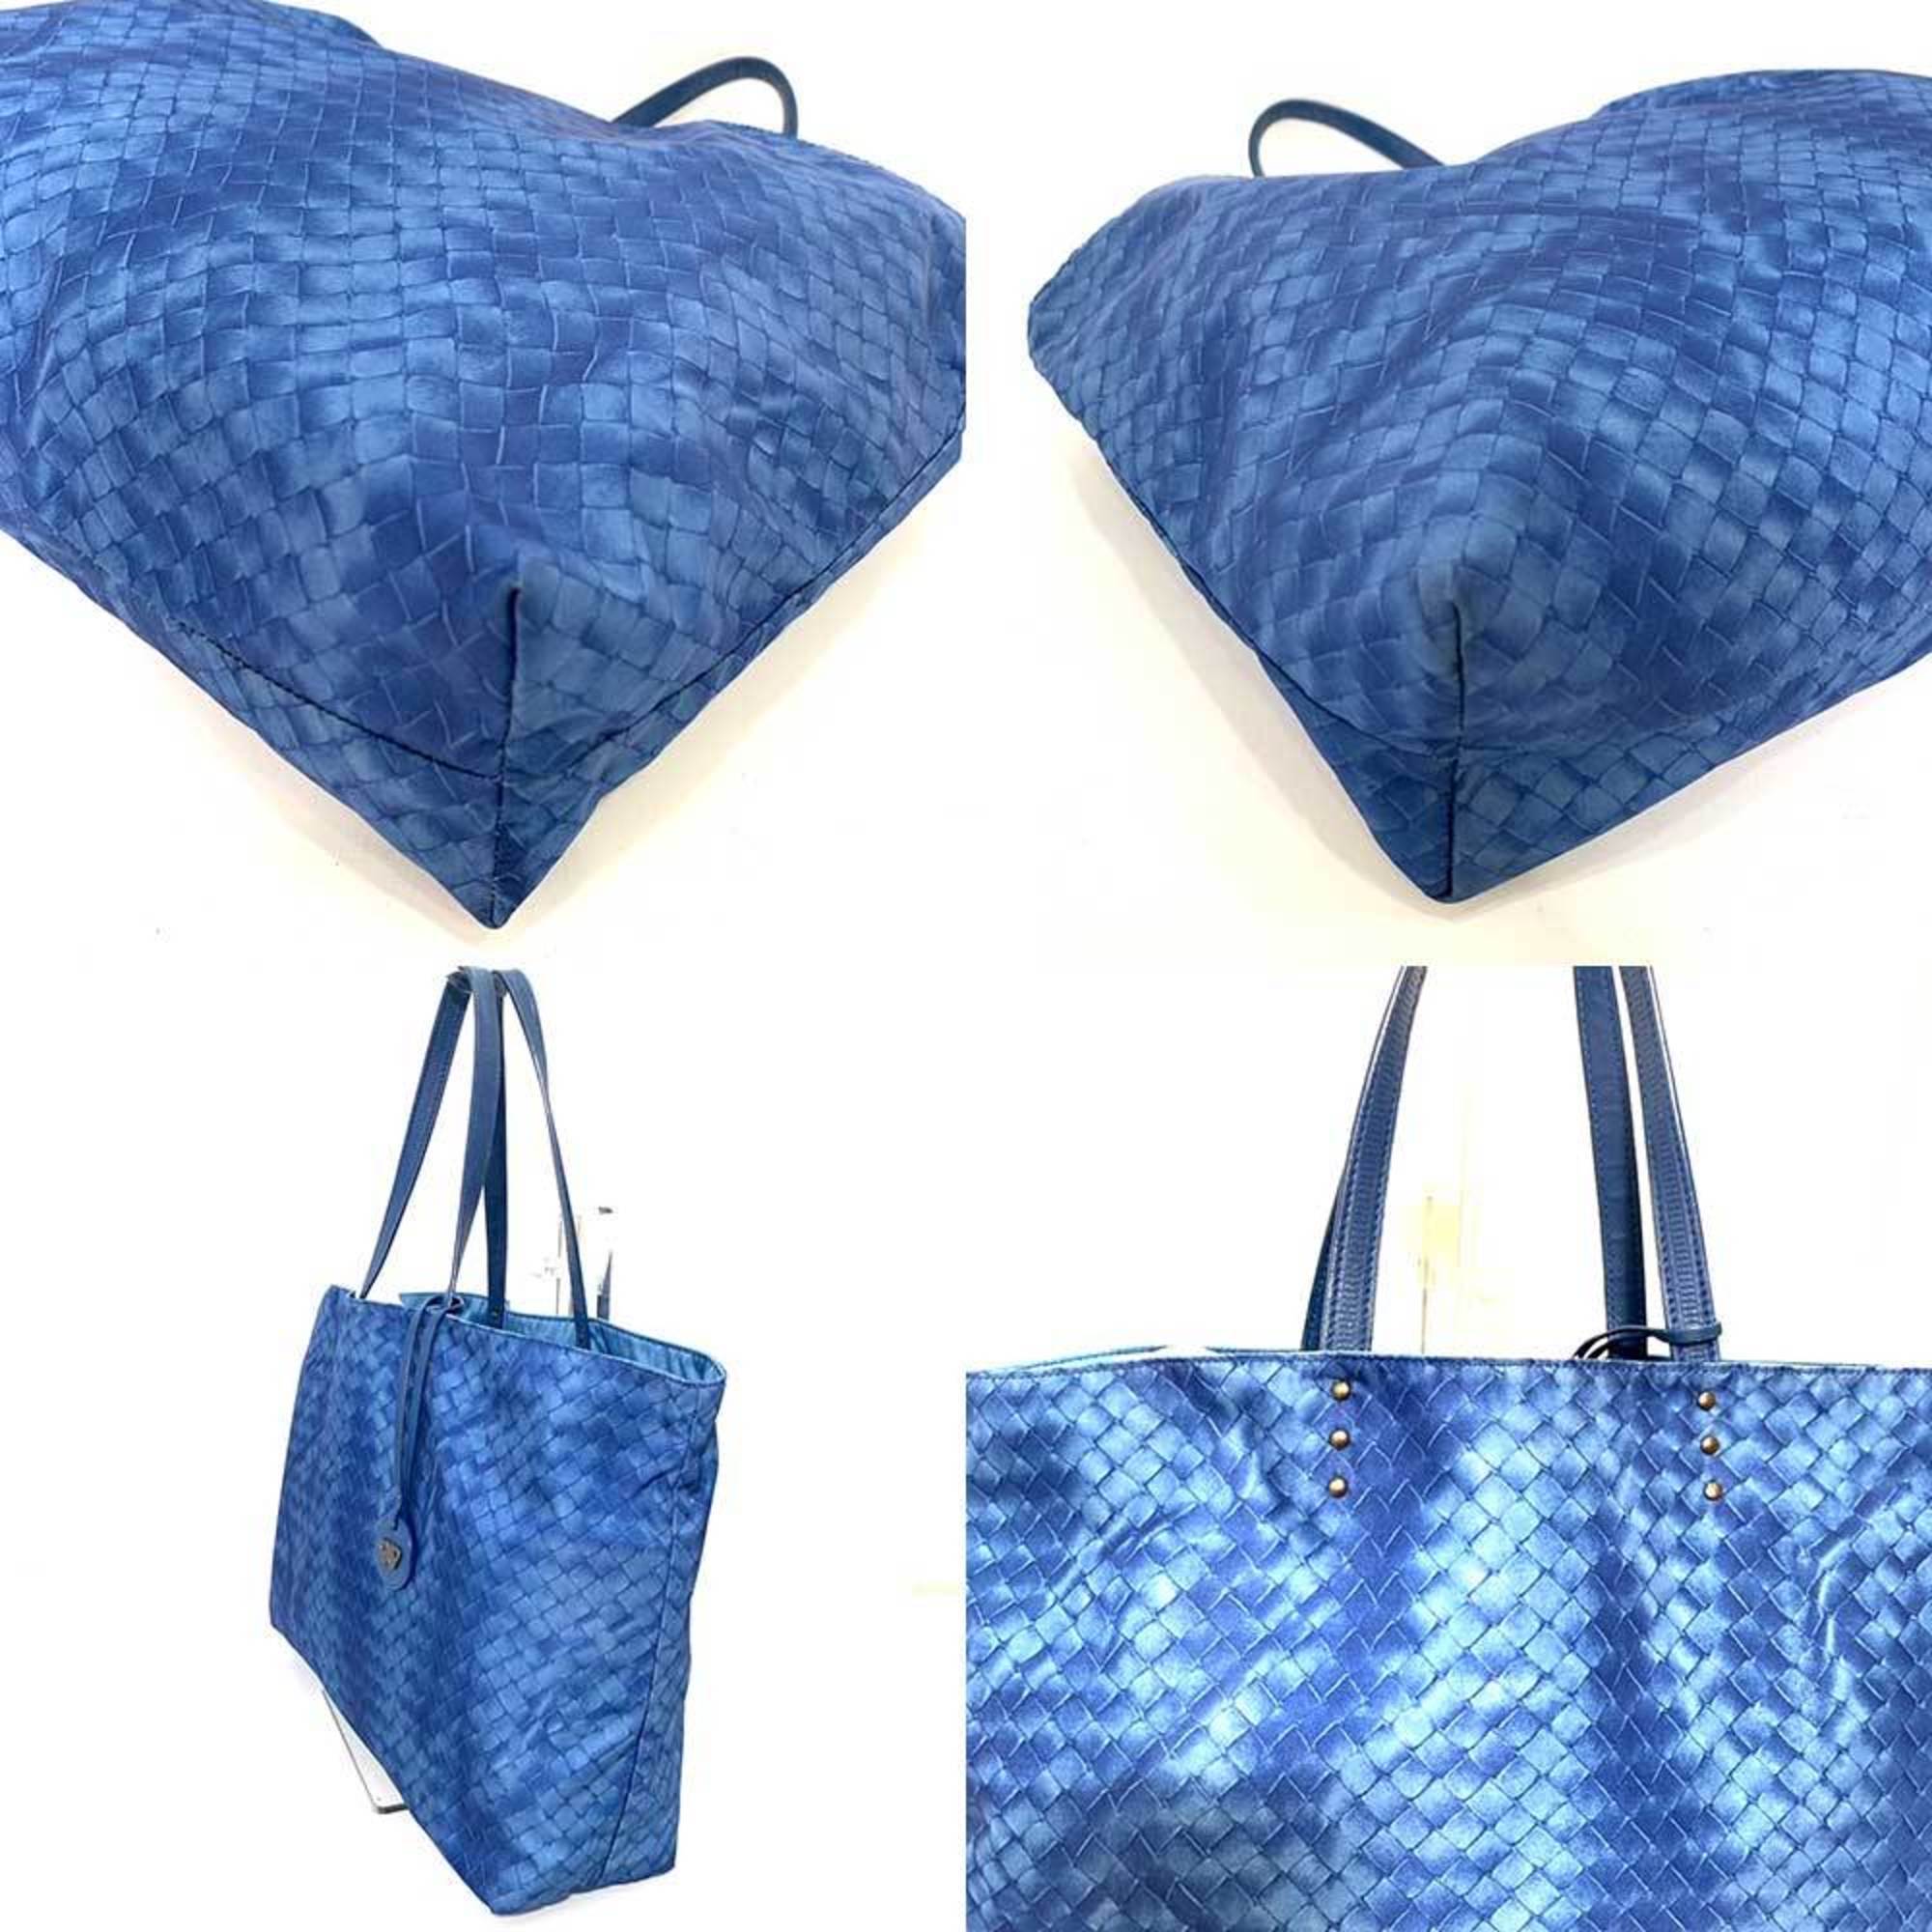 Bottega Veneta Bag Intrecciolusion Medium Tote Blue Men's Women's Nylon x Leather 299875 BOTTEGAVENETA